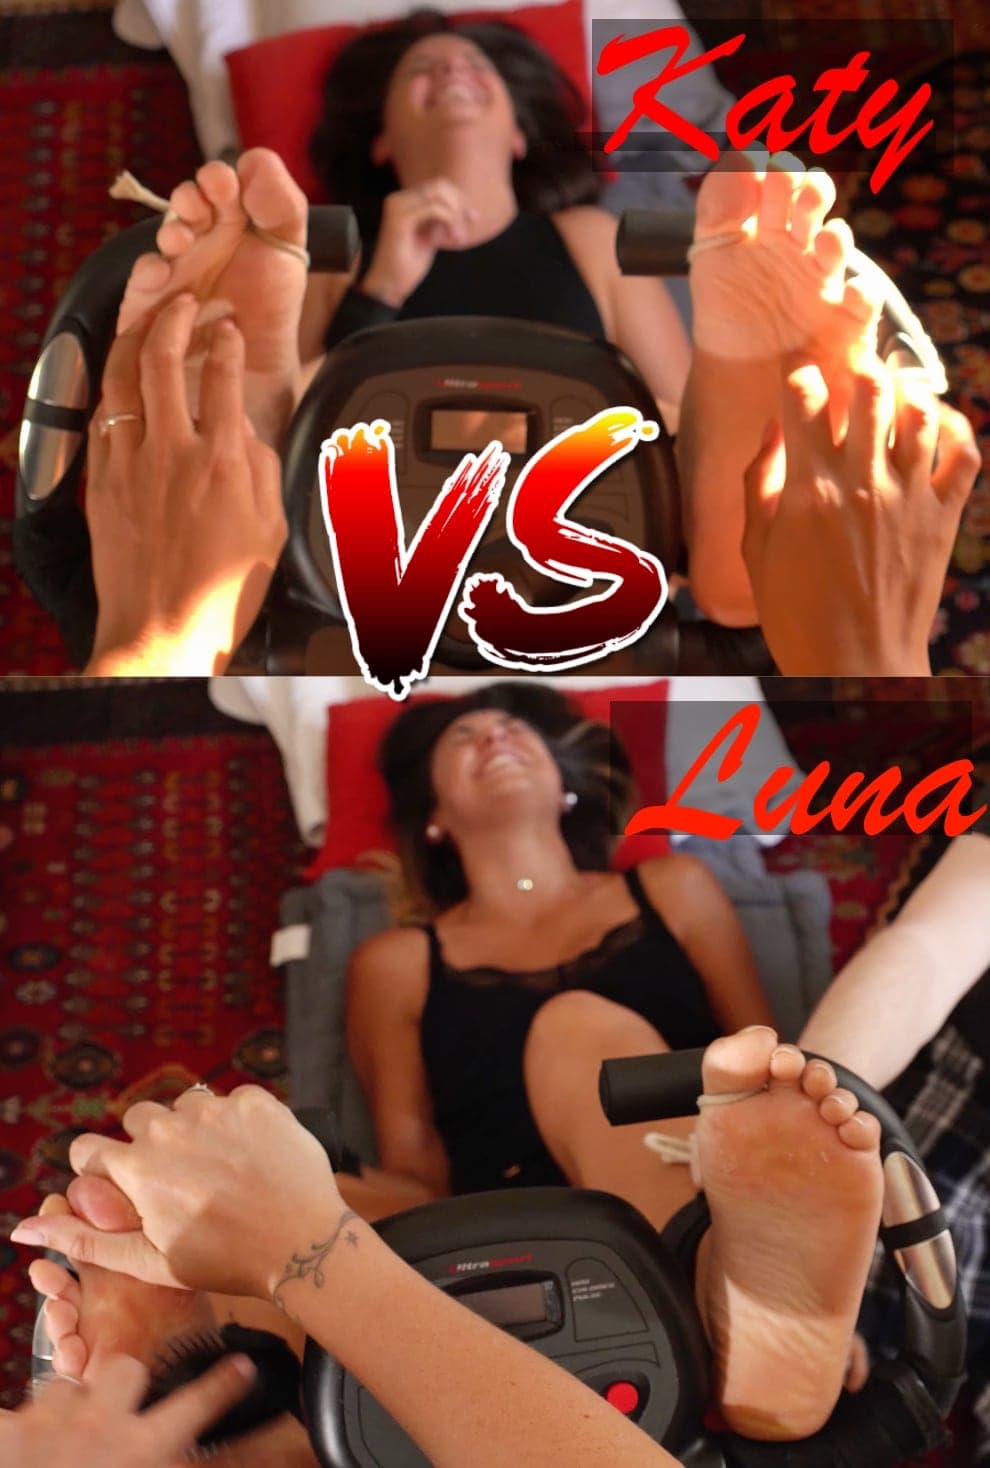 Katy-vs-luna-feet-up.jpg